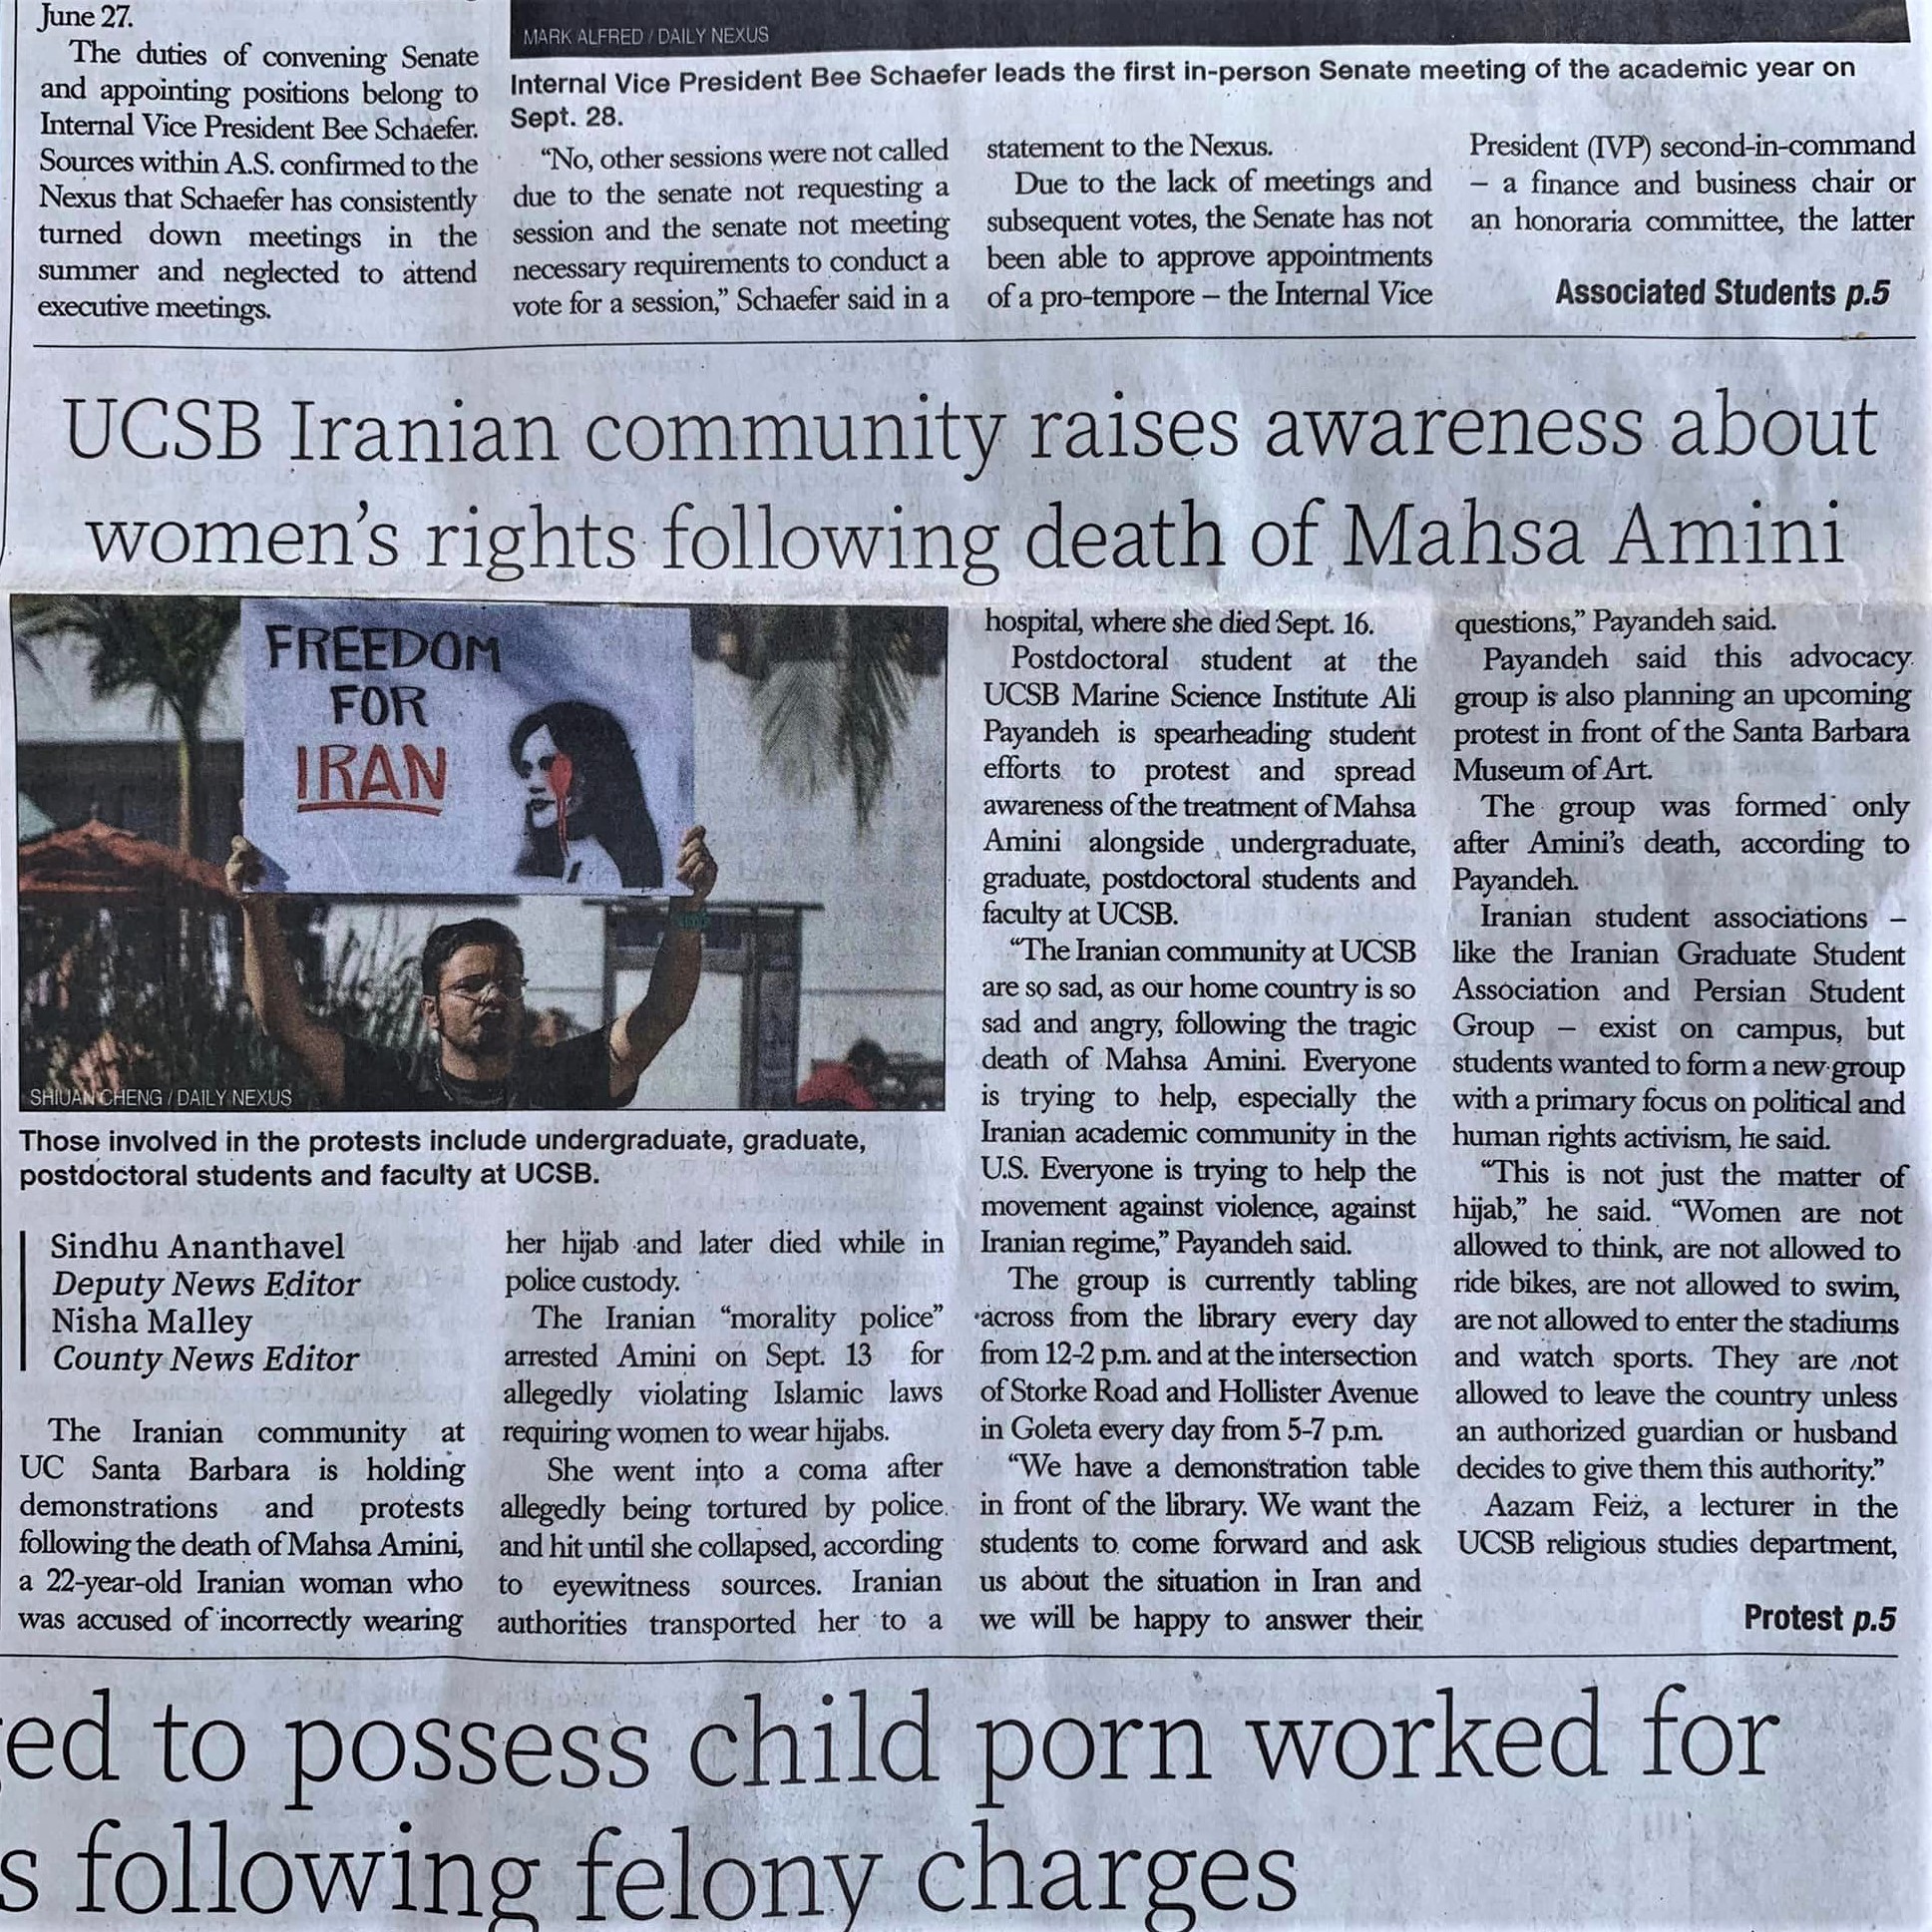 Iran news at UCSB: Page-1 story of 'Daily Nexus'